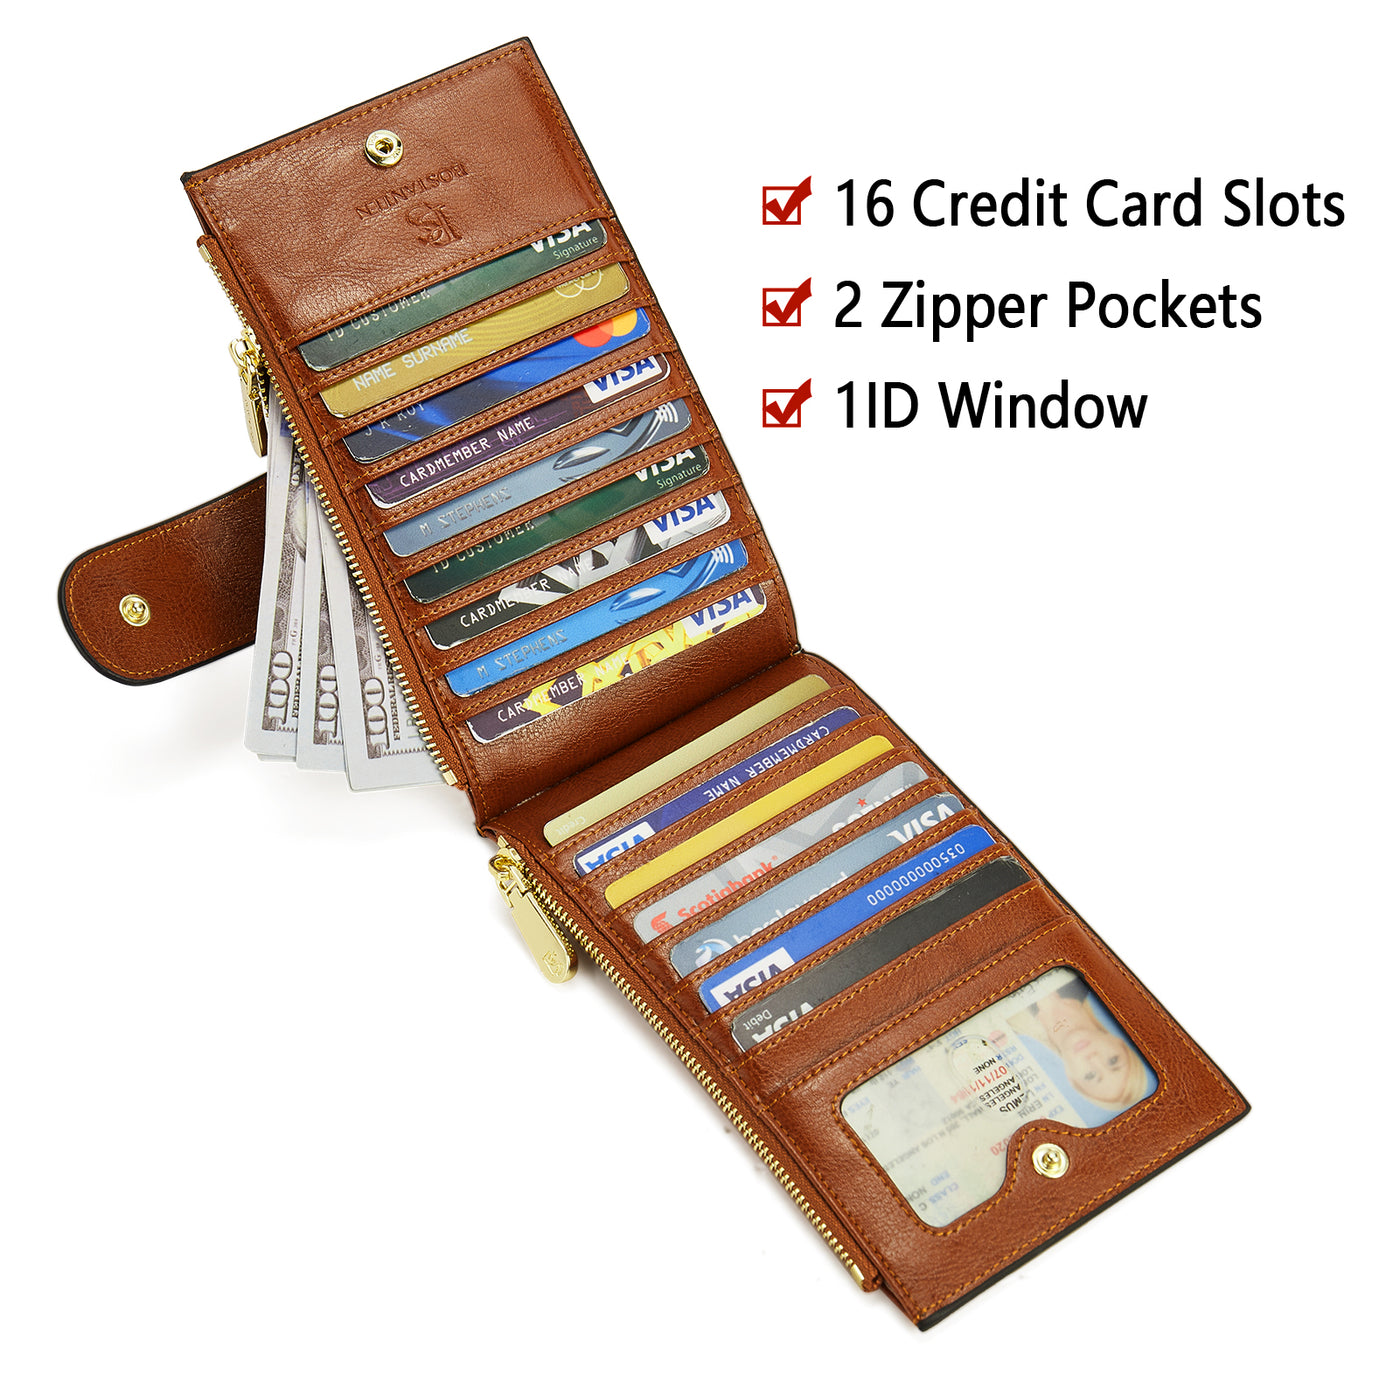 BOSTANTEN Leather Wallets for Women RFID Blocking Slim Bofild Purse Card Holder with Zipper Pocket